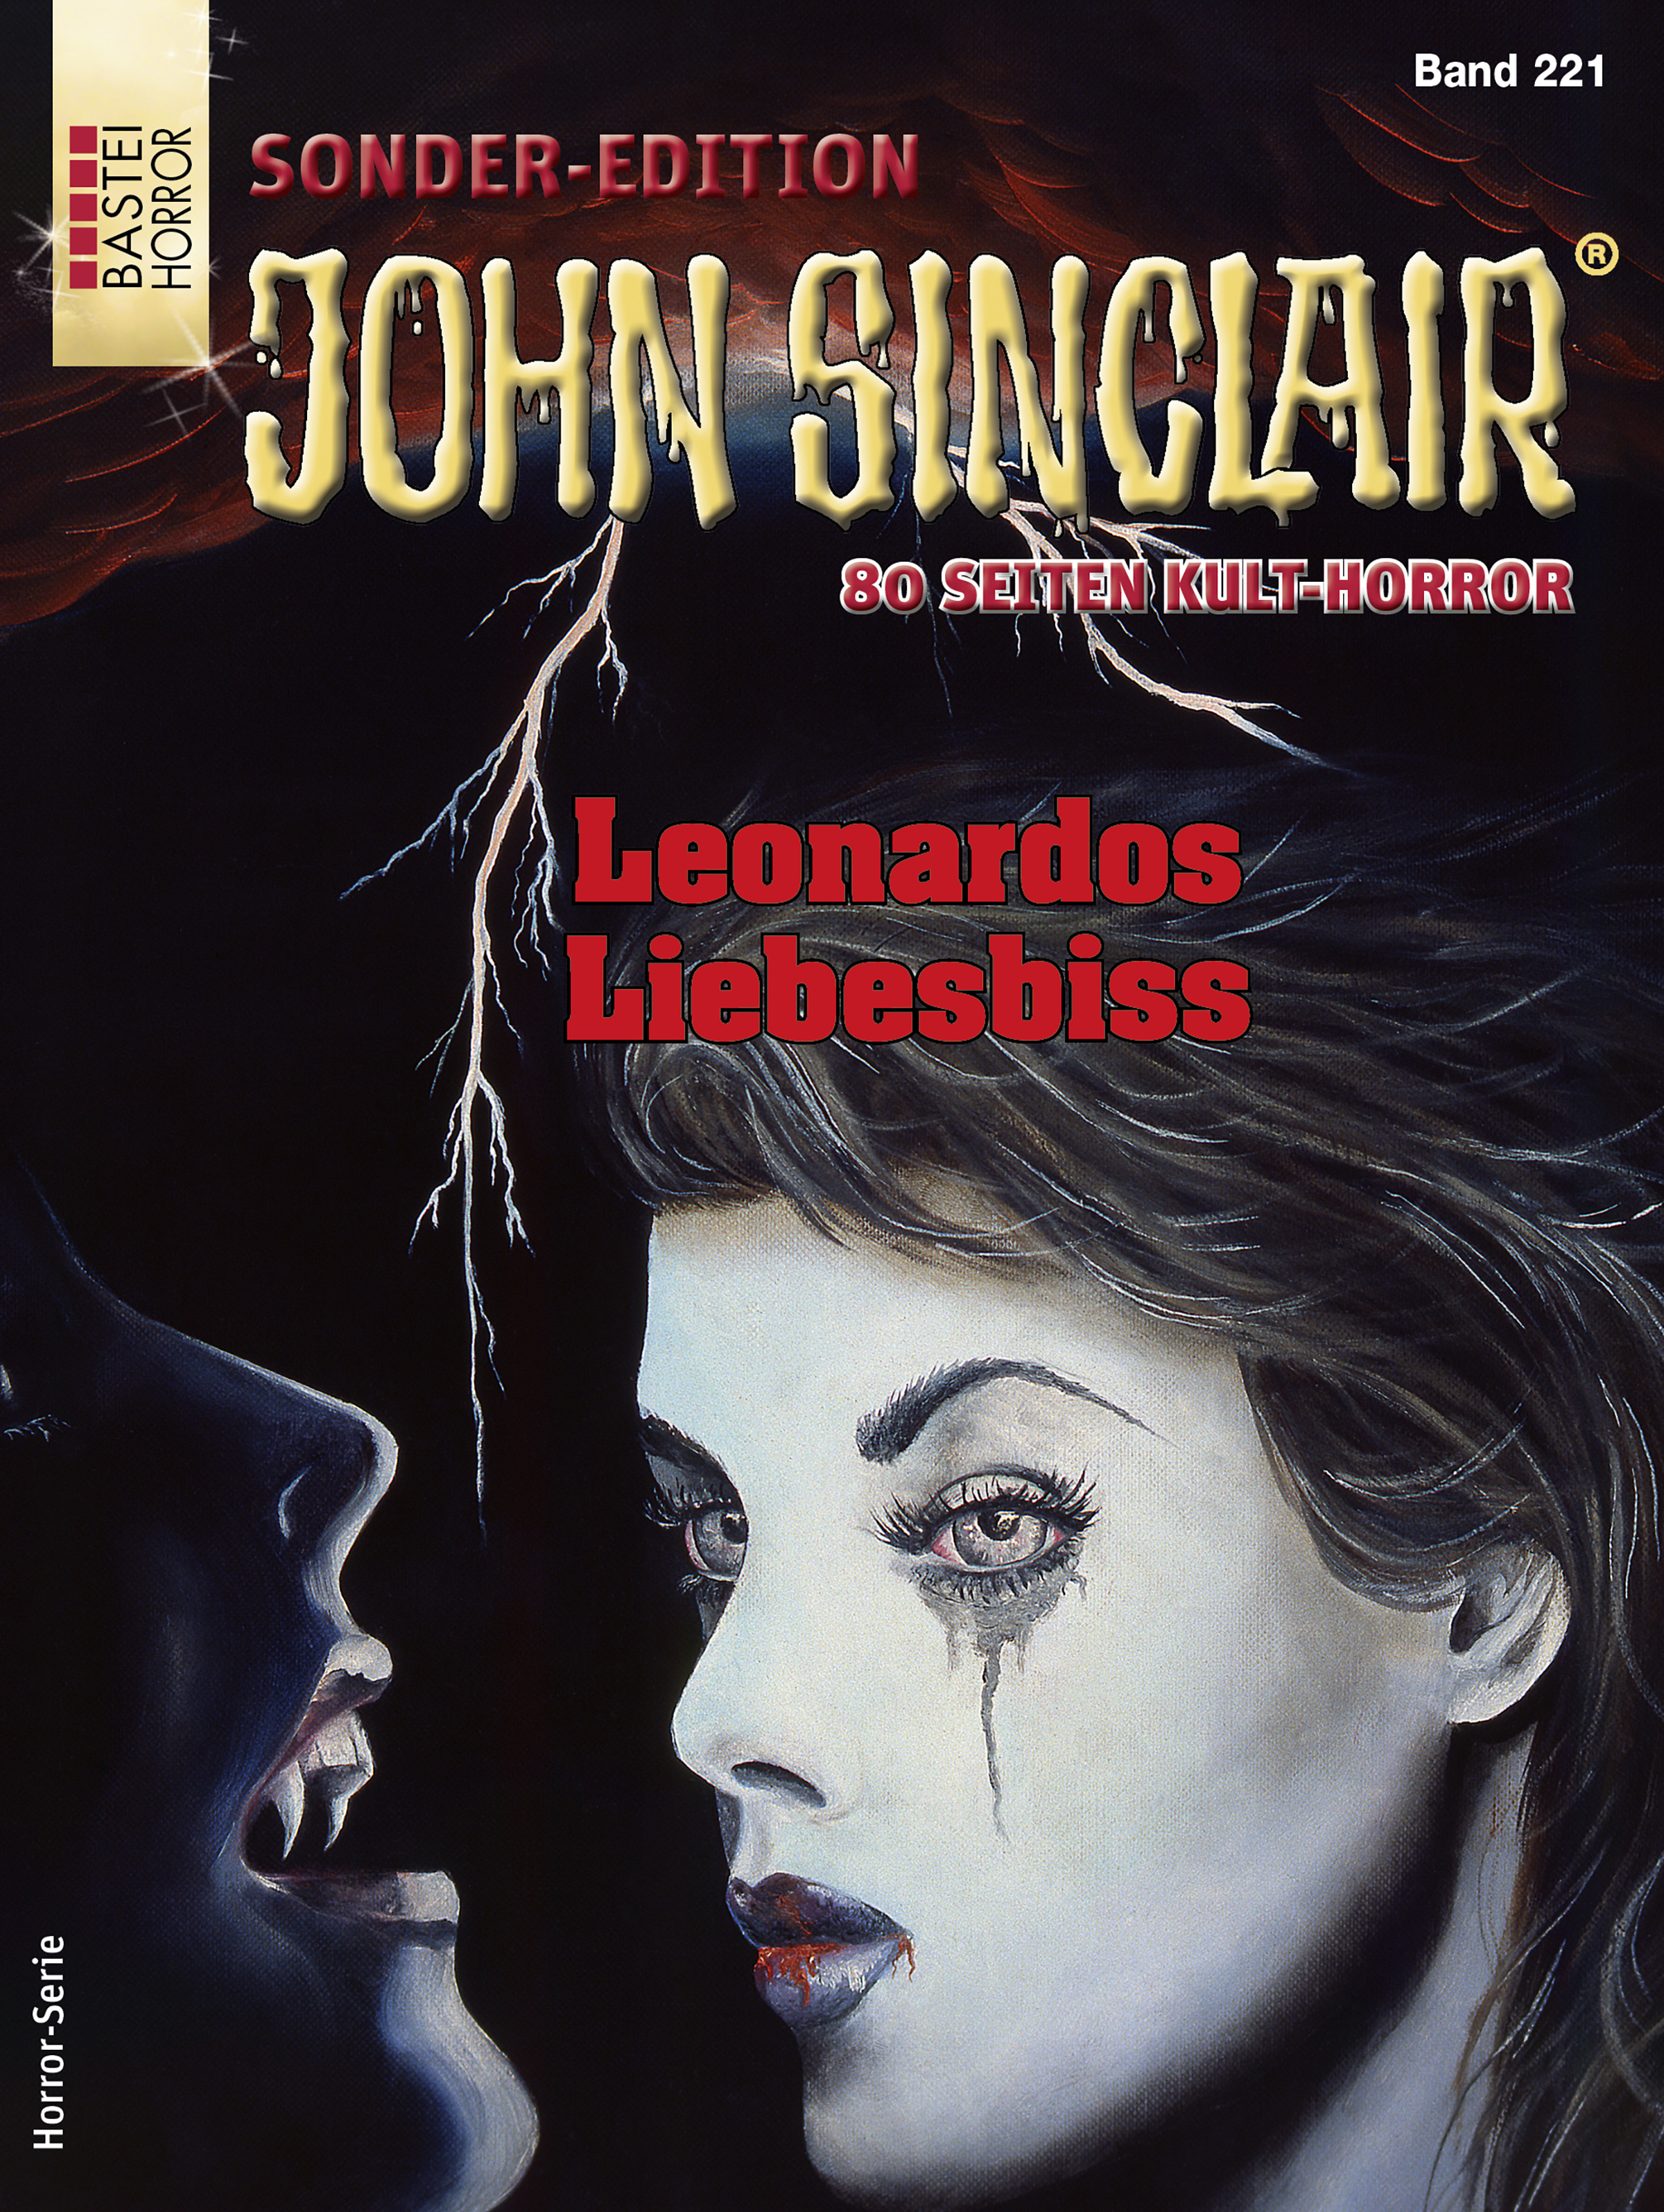 John Sinclair Sonder-Edition